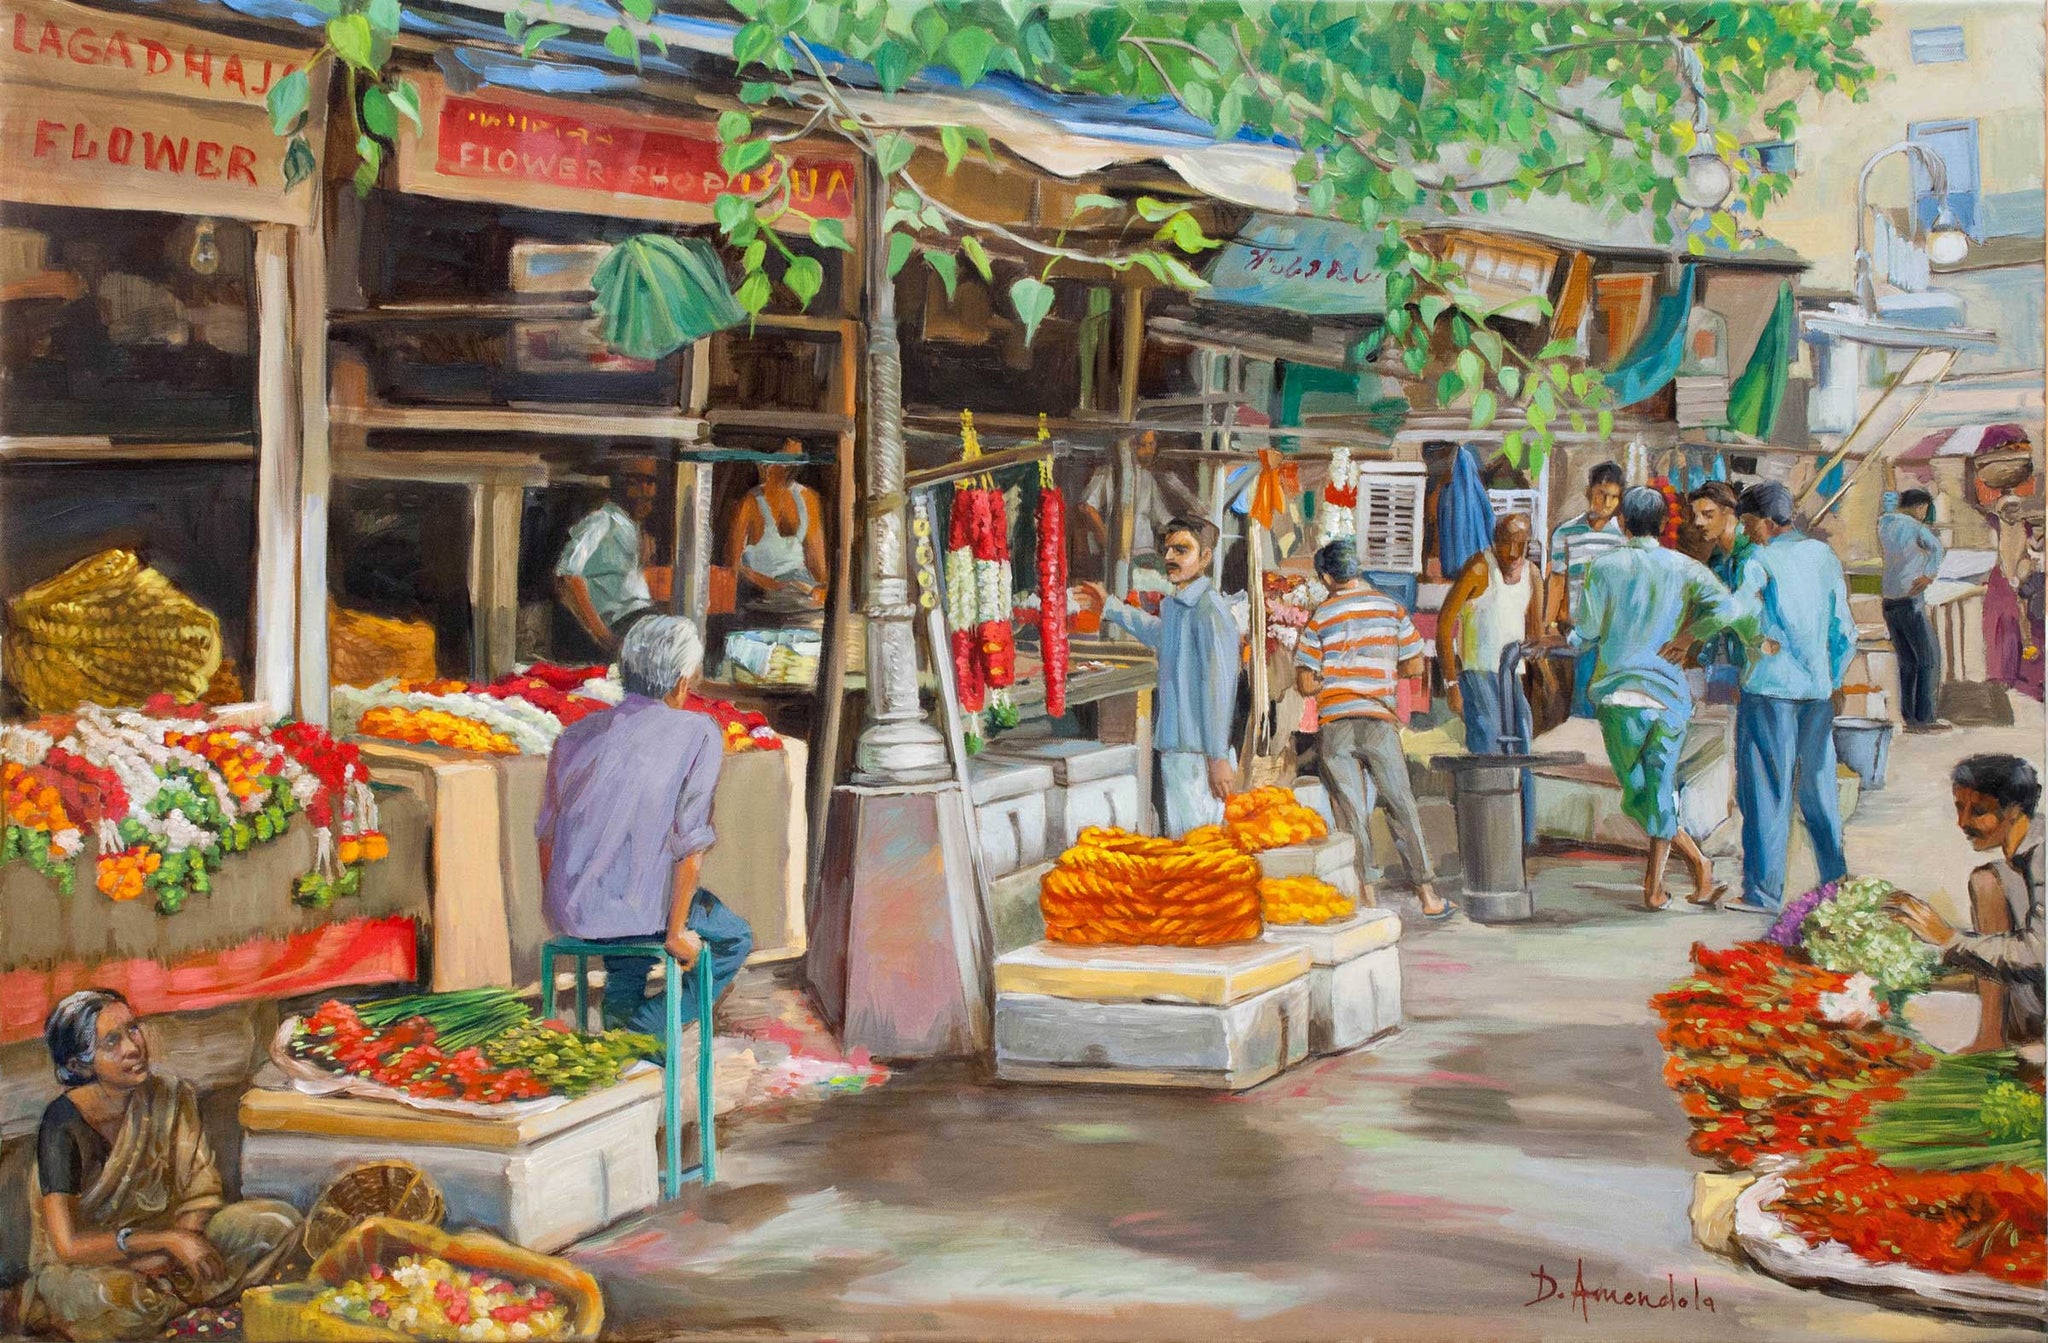 India Flower Market Street